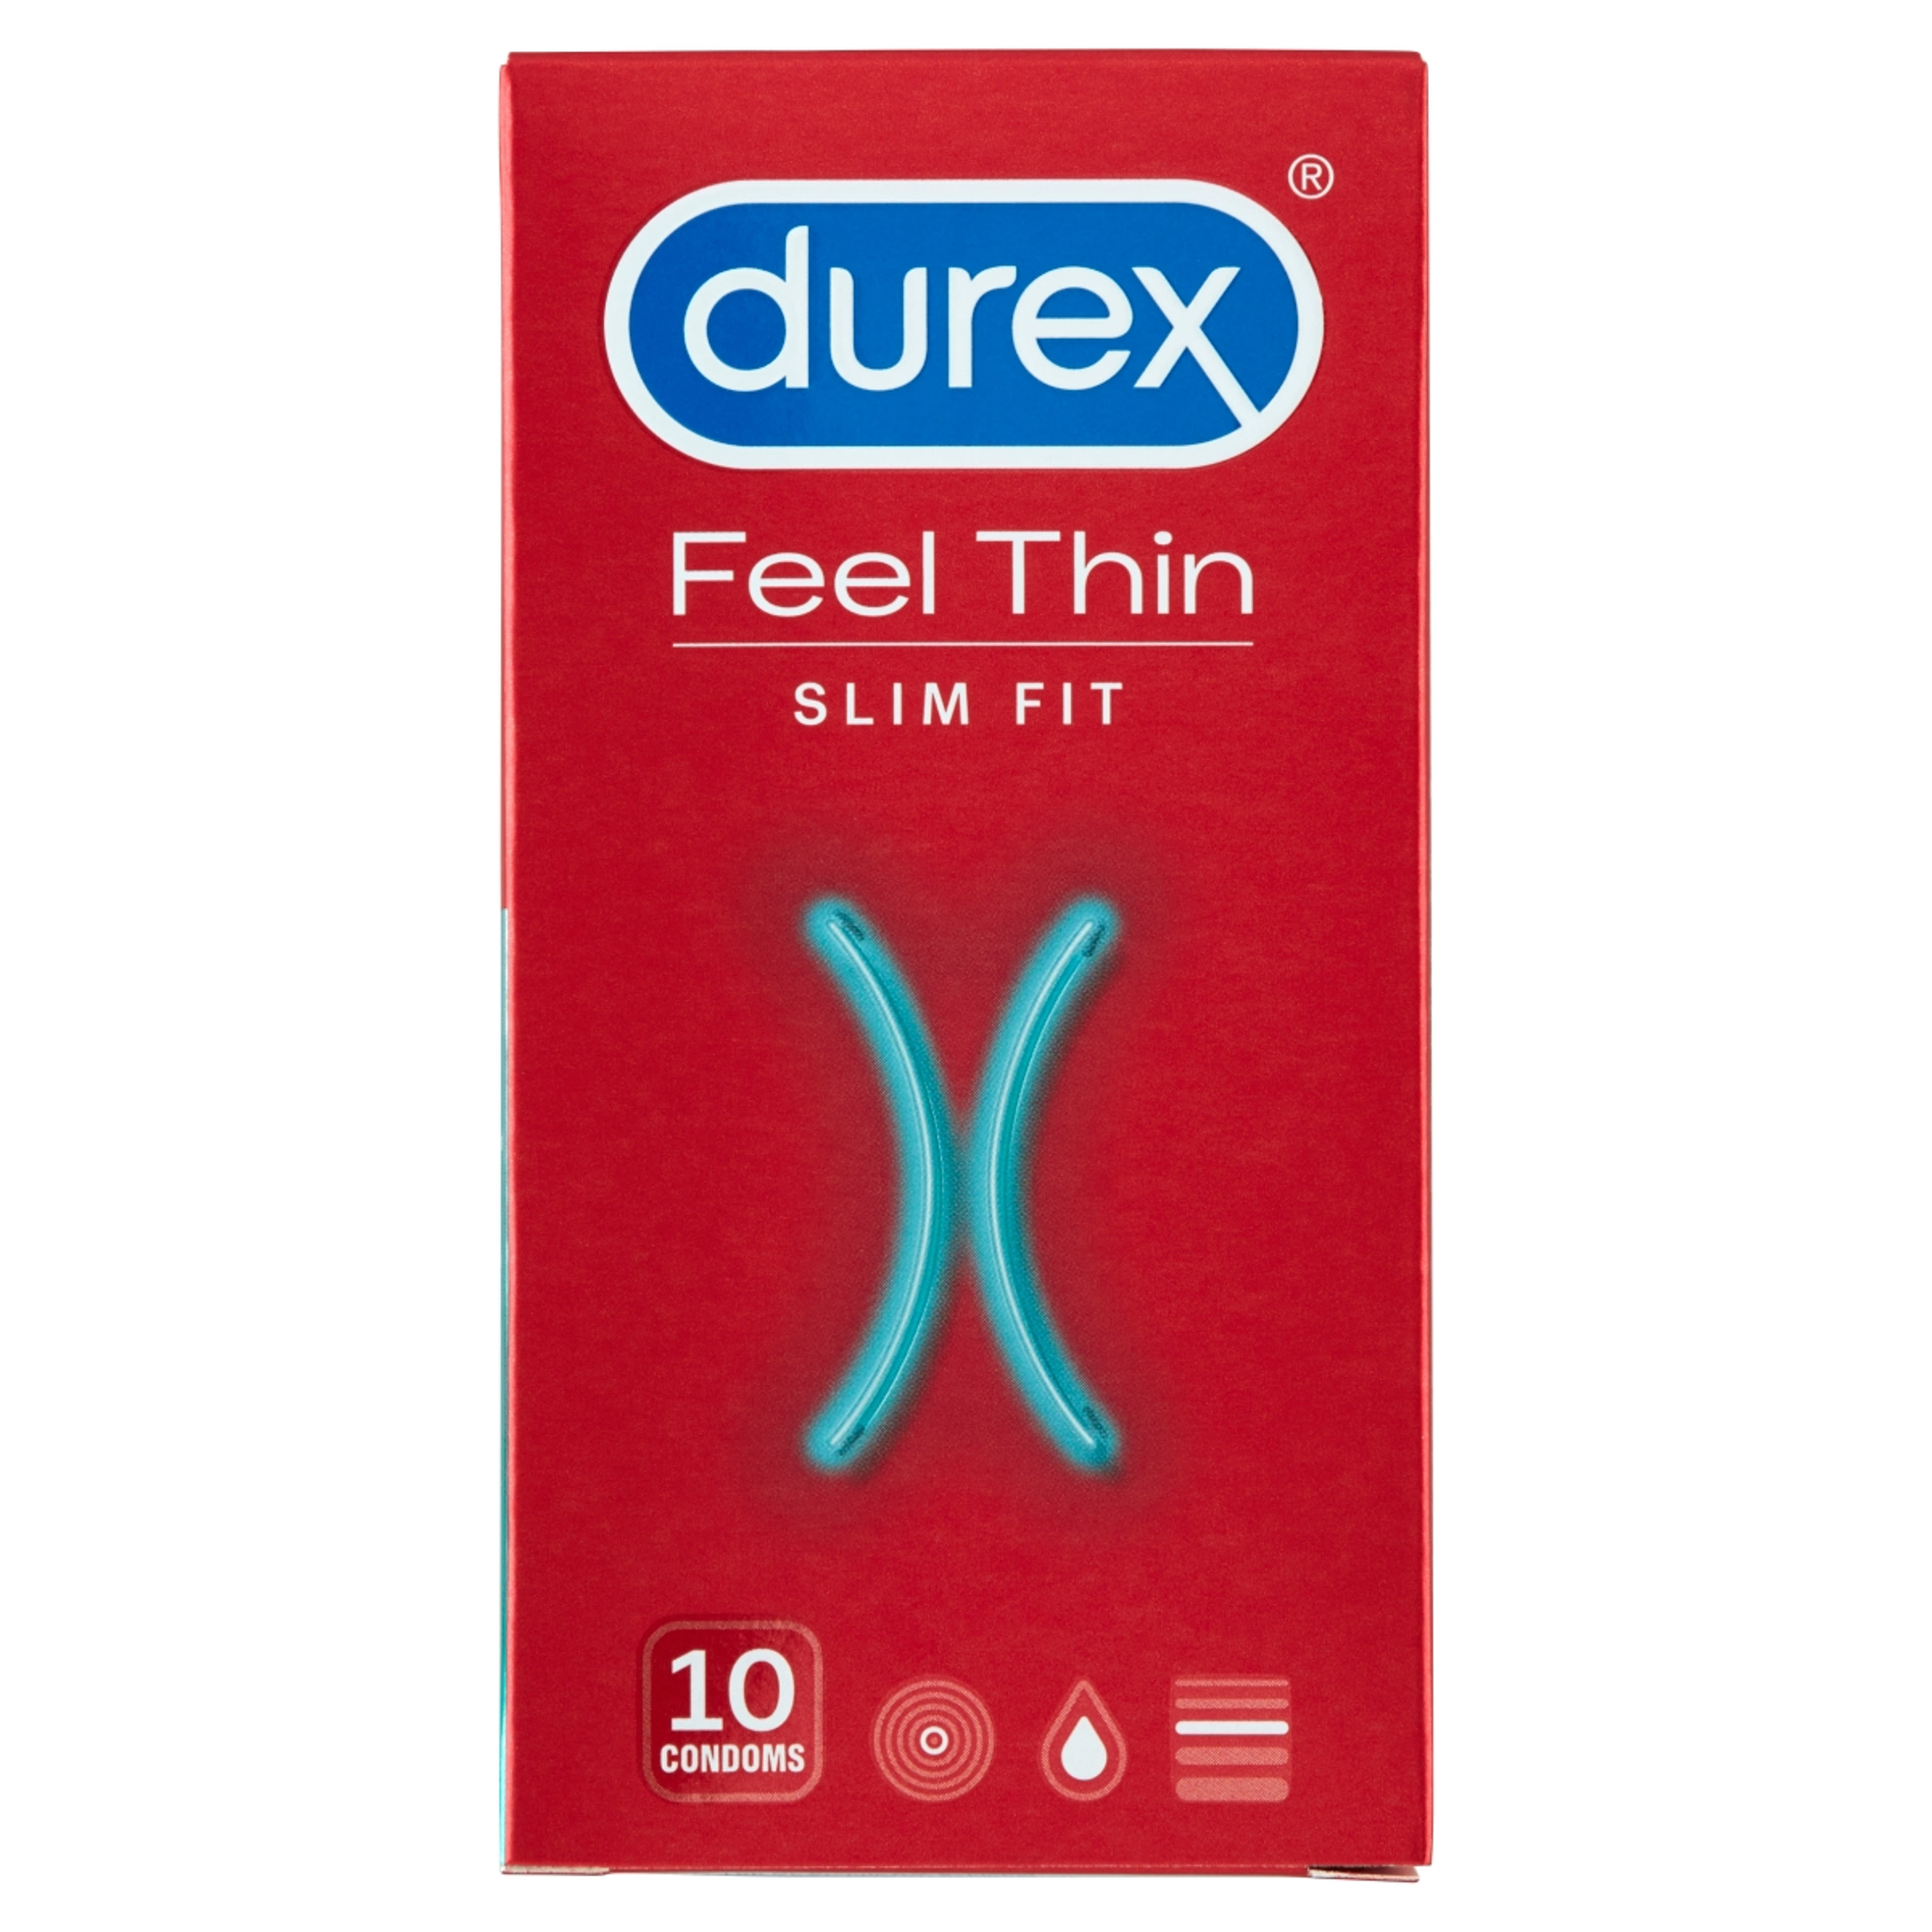 Durex óvszer feel thin slim fit - 10 db-1